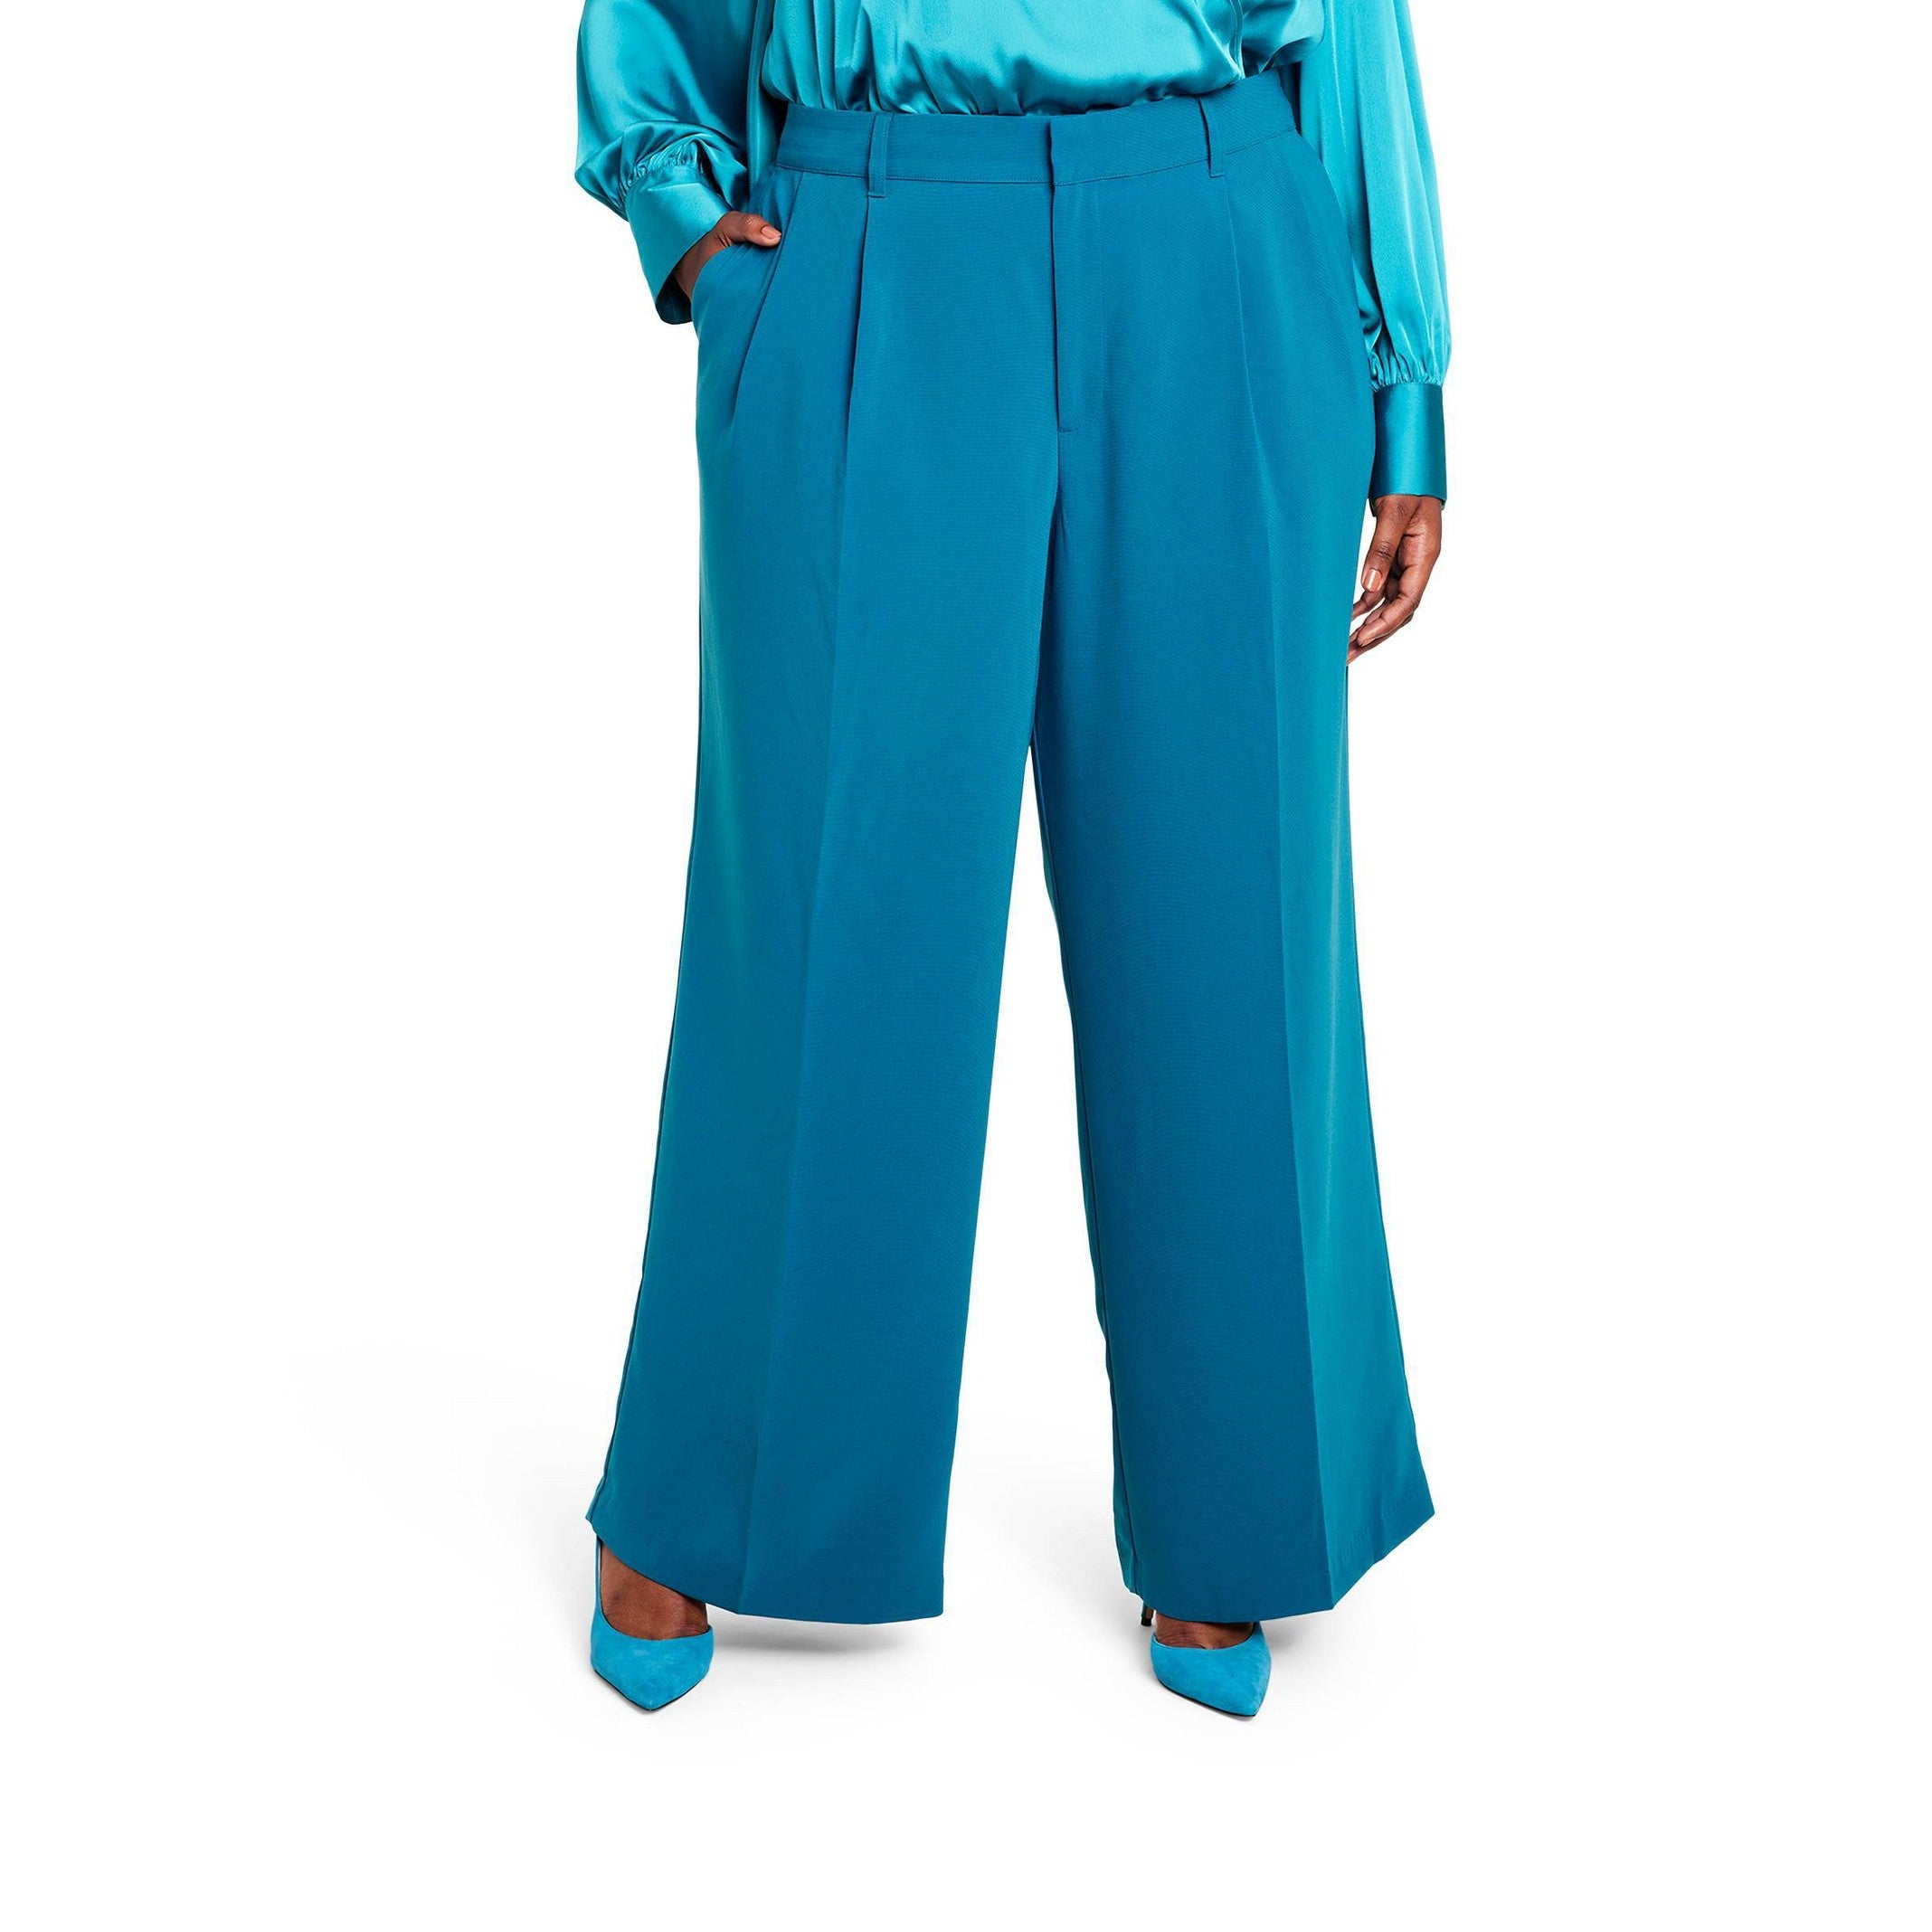 Clacive Blue Office Women's Pants 2021 Fashion Loose Full Length Ladies  Trousers Casual High Waist Wide Pants For Women - Pants & Capris -  AliExpress